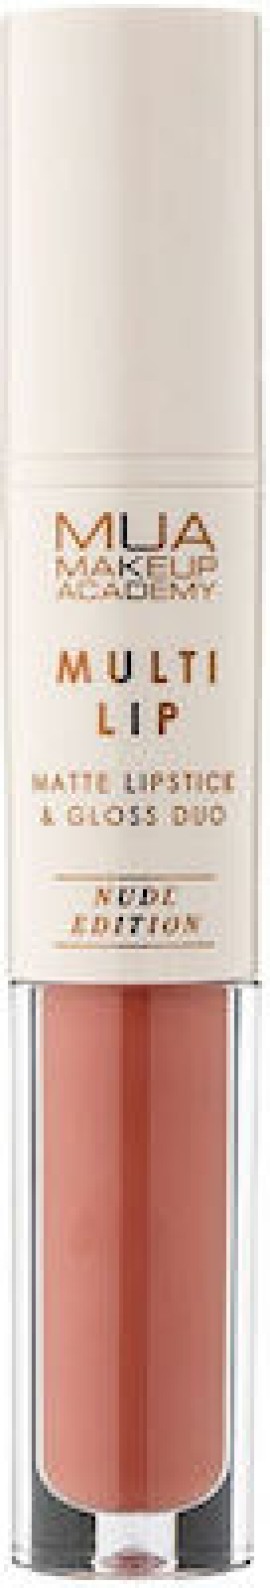 MUA Lipstick & Gloss Duo Nude Edition Cozy 3.2gr & 2ml